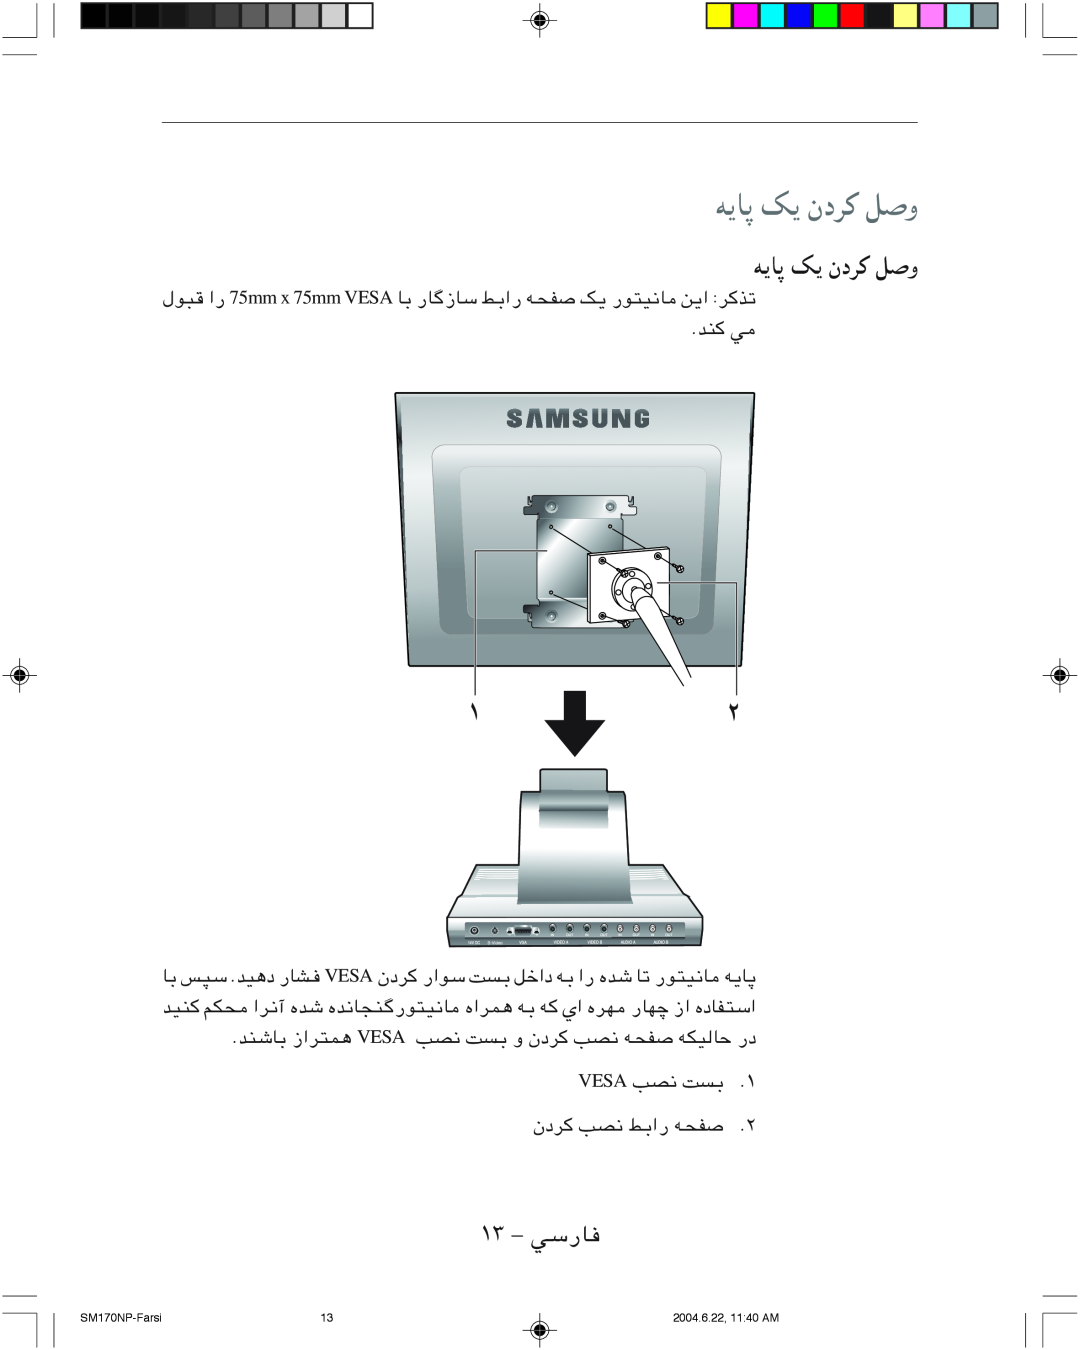 Samsung SMT-170P manual ﻪﻳﺎﭘ ﻚﻳ ندﺮﻛ ﻞﺻو, ۱۳ - ﻲﺳرﺎﻓ, SM170NP-Farsi, 2004.6.22, 1140 AM 